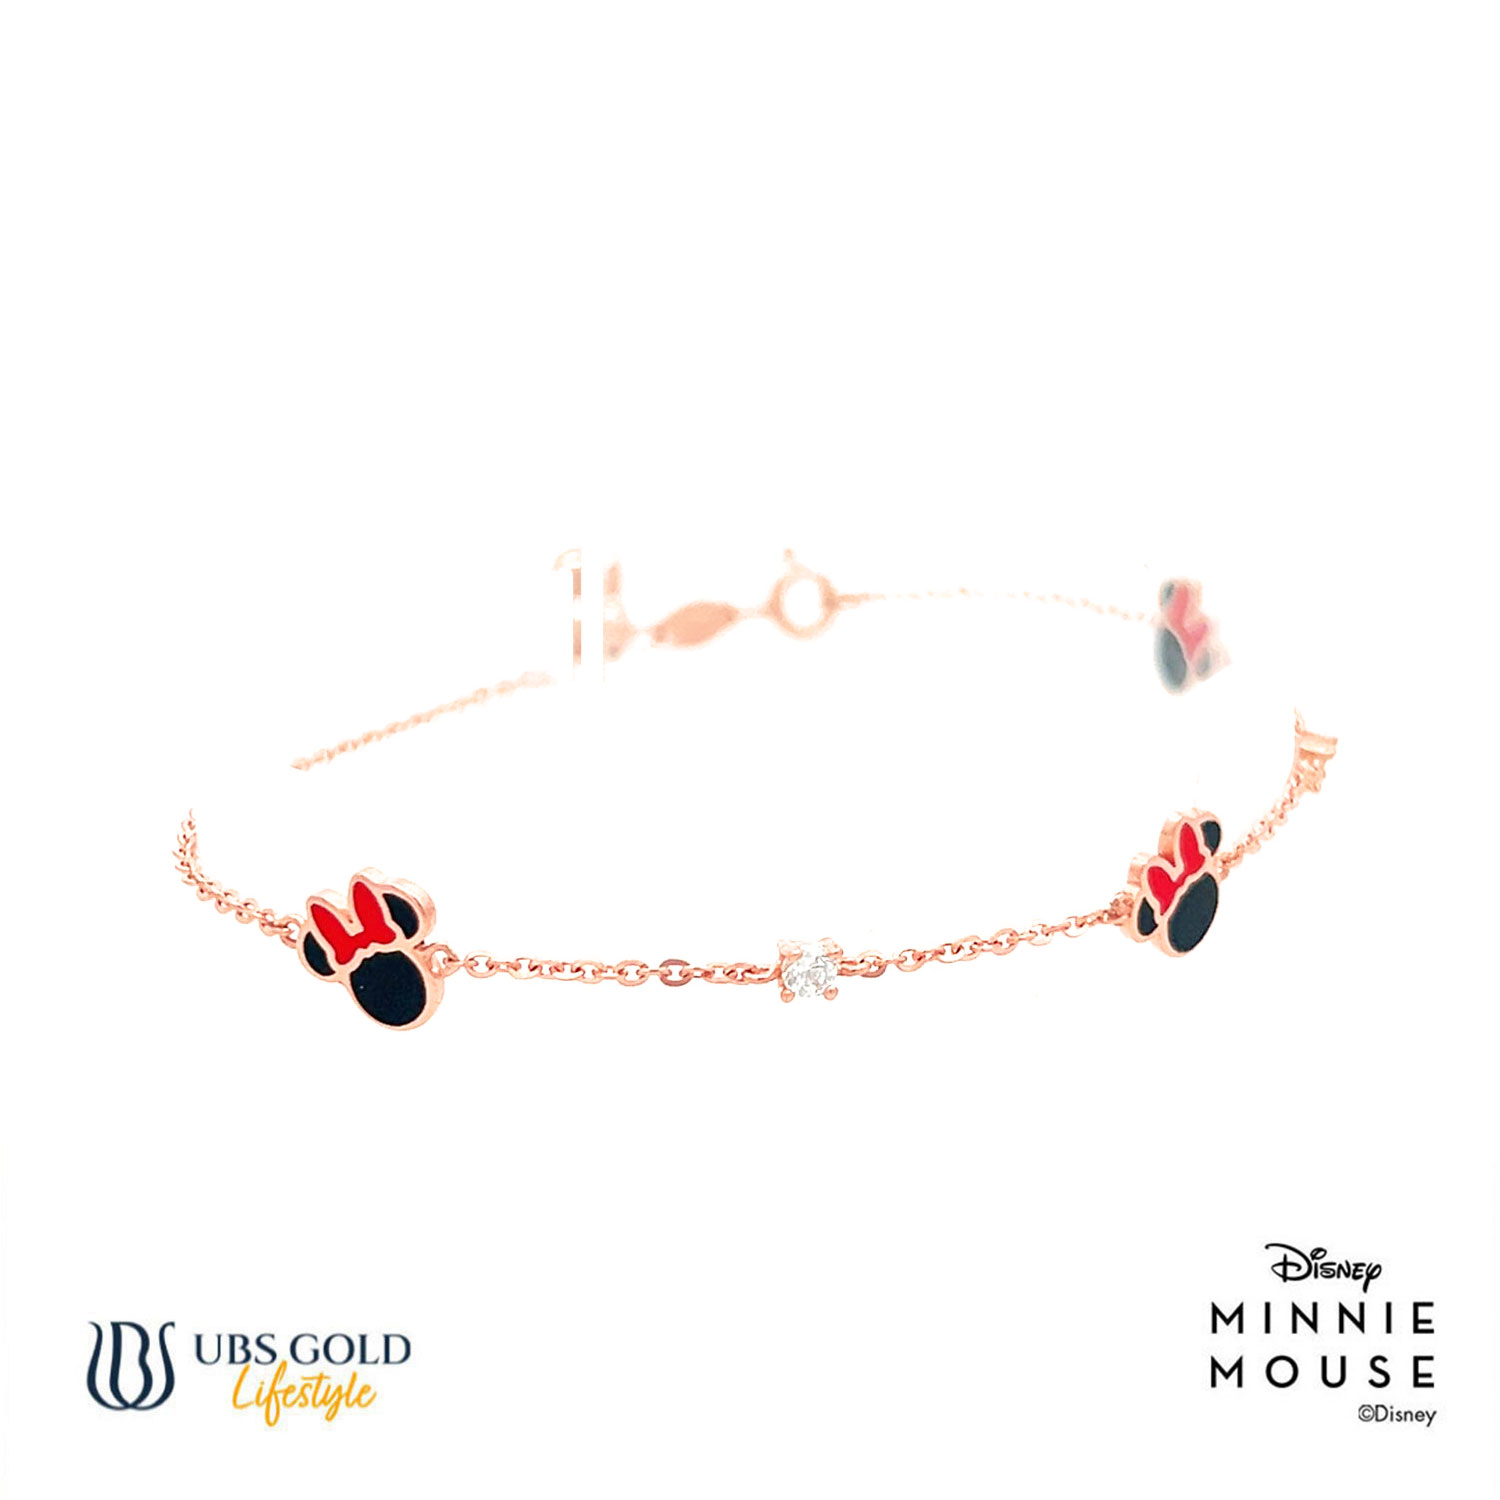 UBS Gold Gelang Emas Disney Minnie Mouse - Kgy0116 - 17K